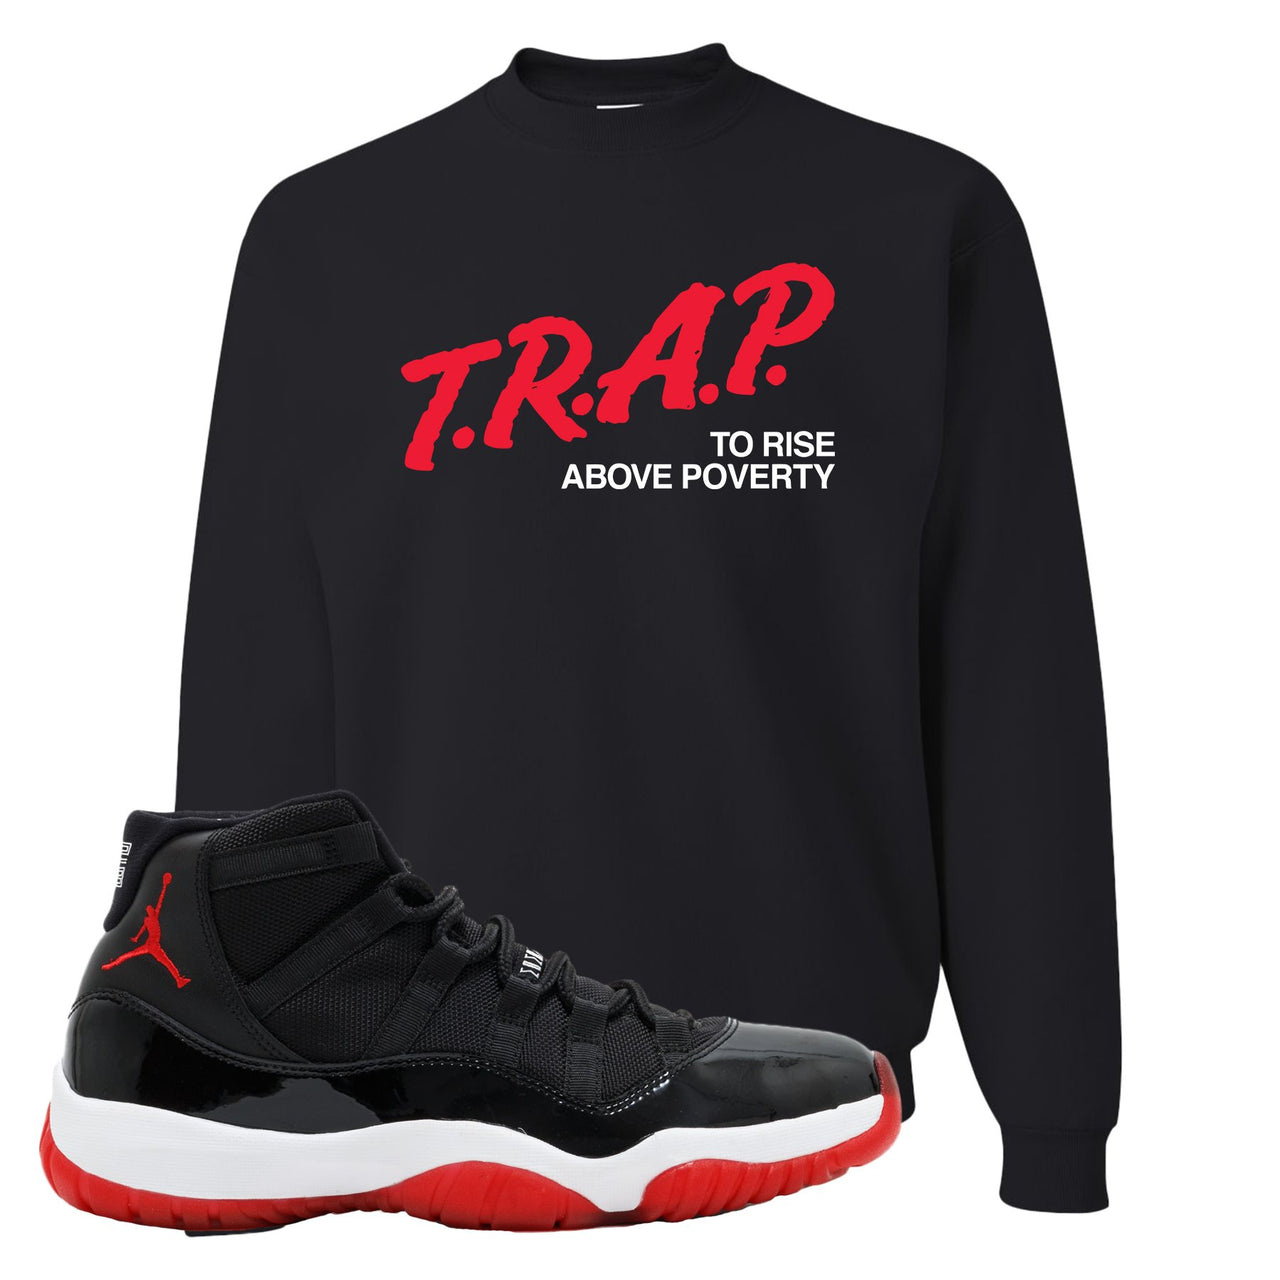 Jordan 11 Bred Trap To Rise Above Poverty Black Sneaker Hook Up Crewneck Sweatshirt